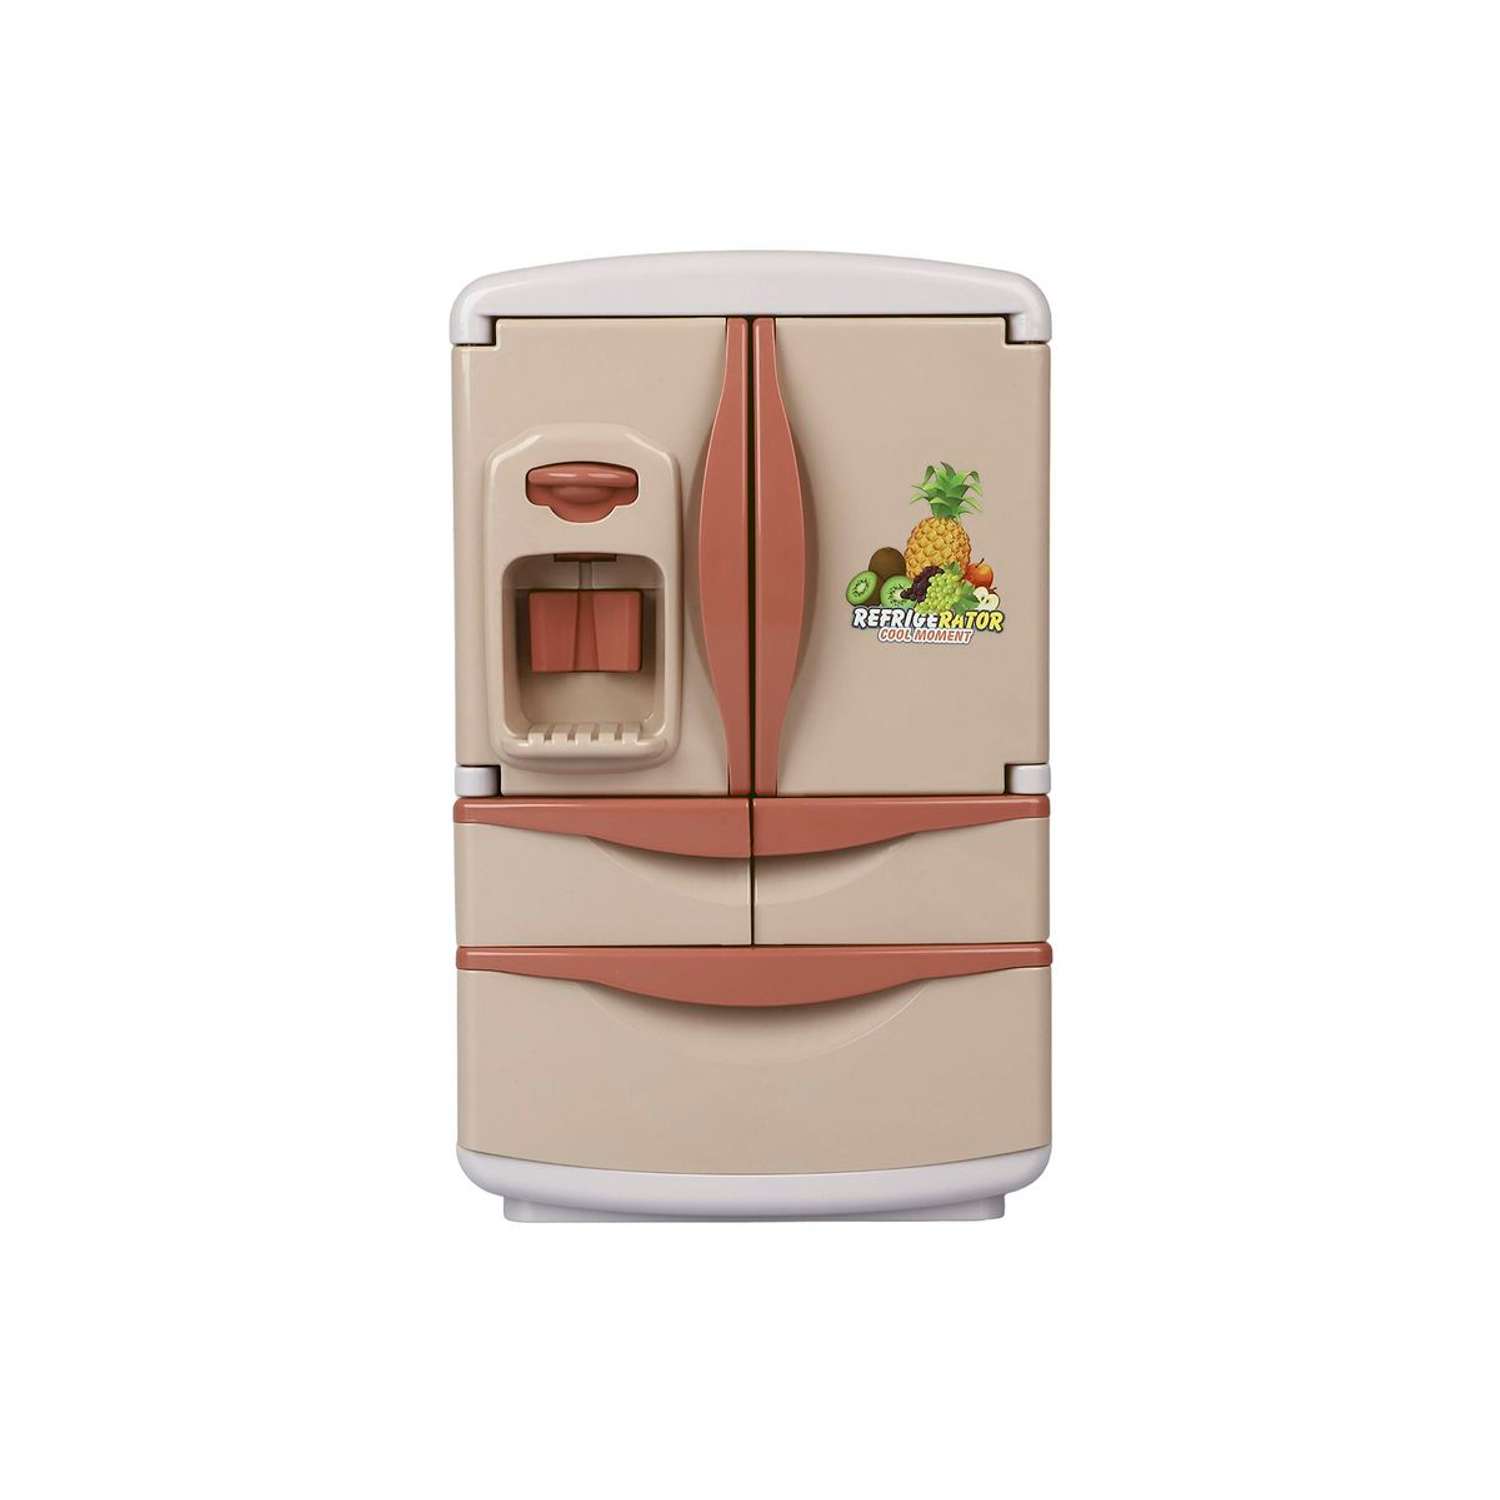 Игровая техника AMORE BELLO Холодильник - фото 7